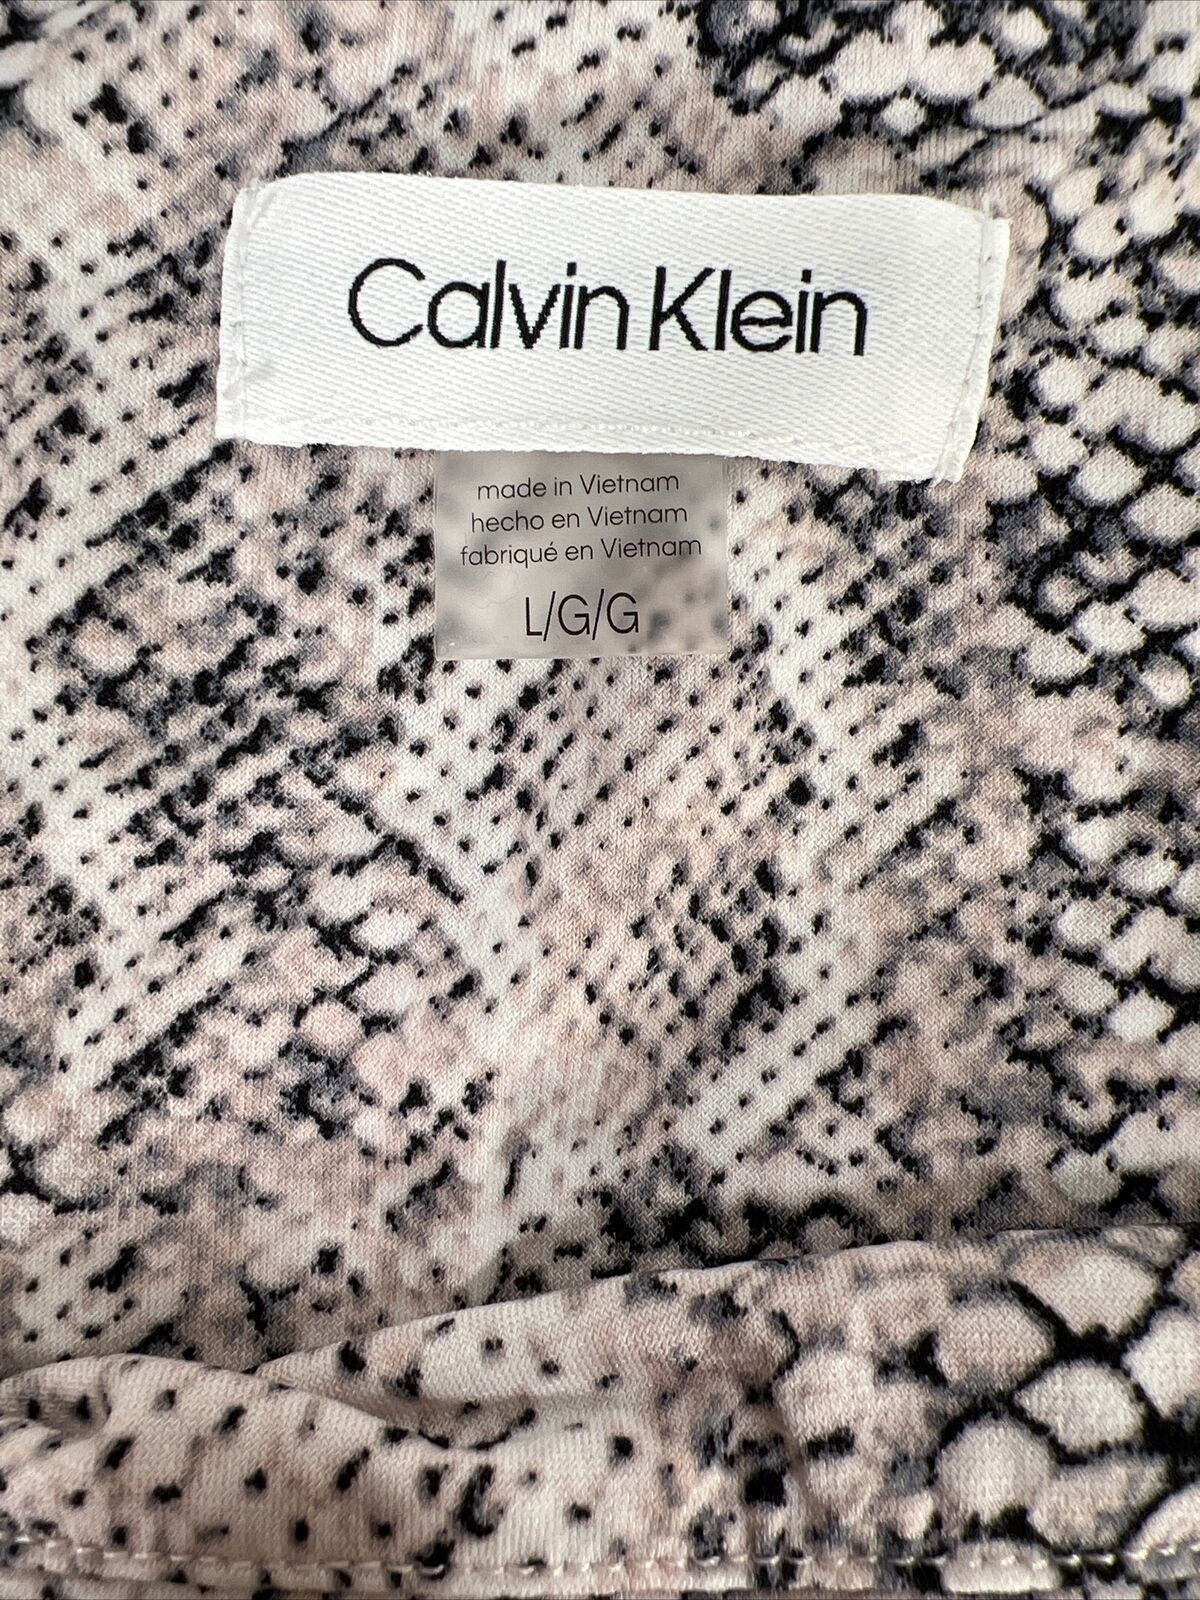 Calvin Klein Women's White/Black Reptile Print Sleeveless Tank Top - L